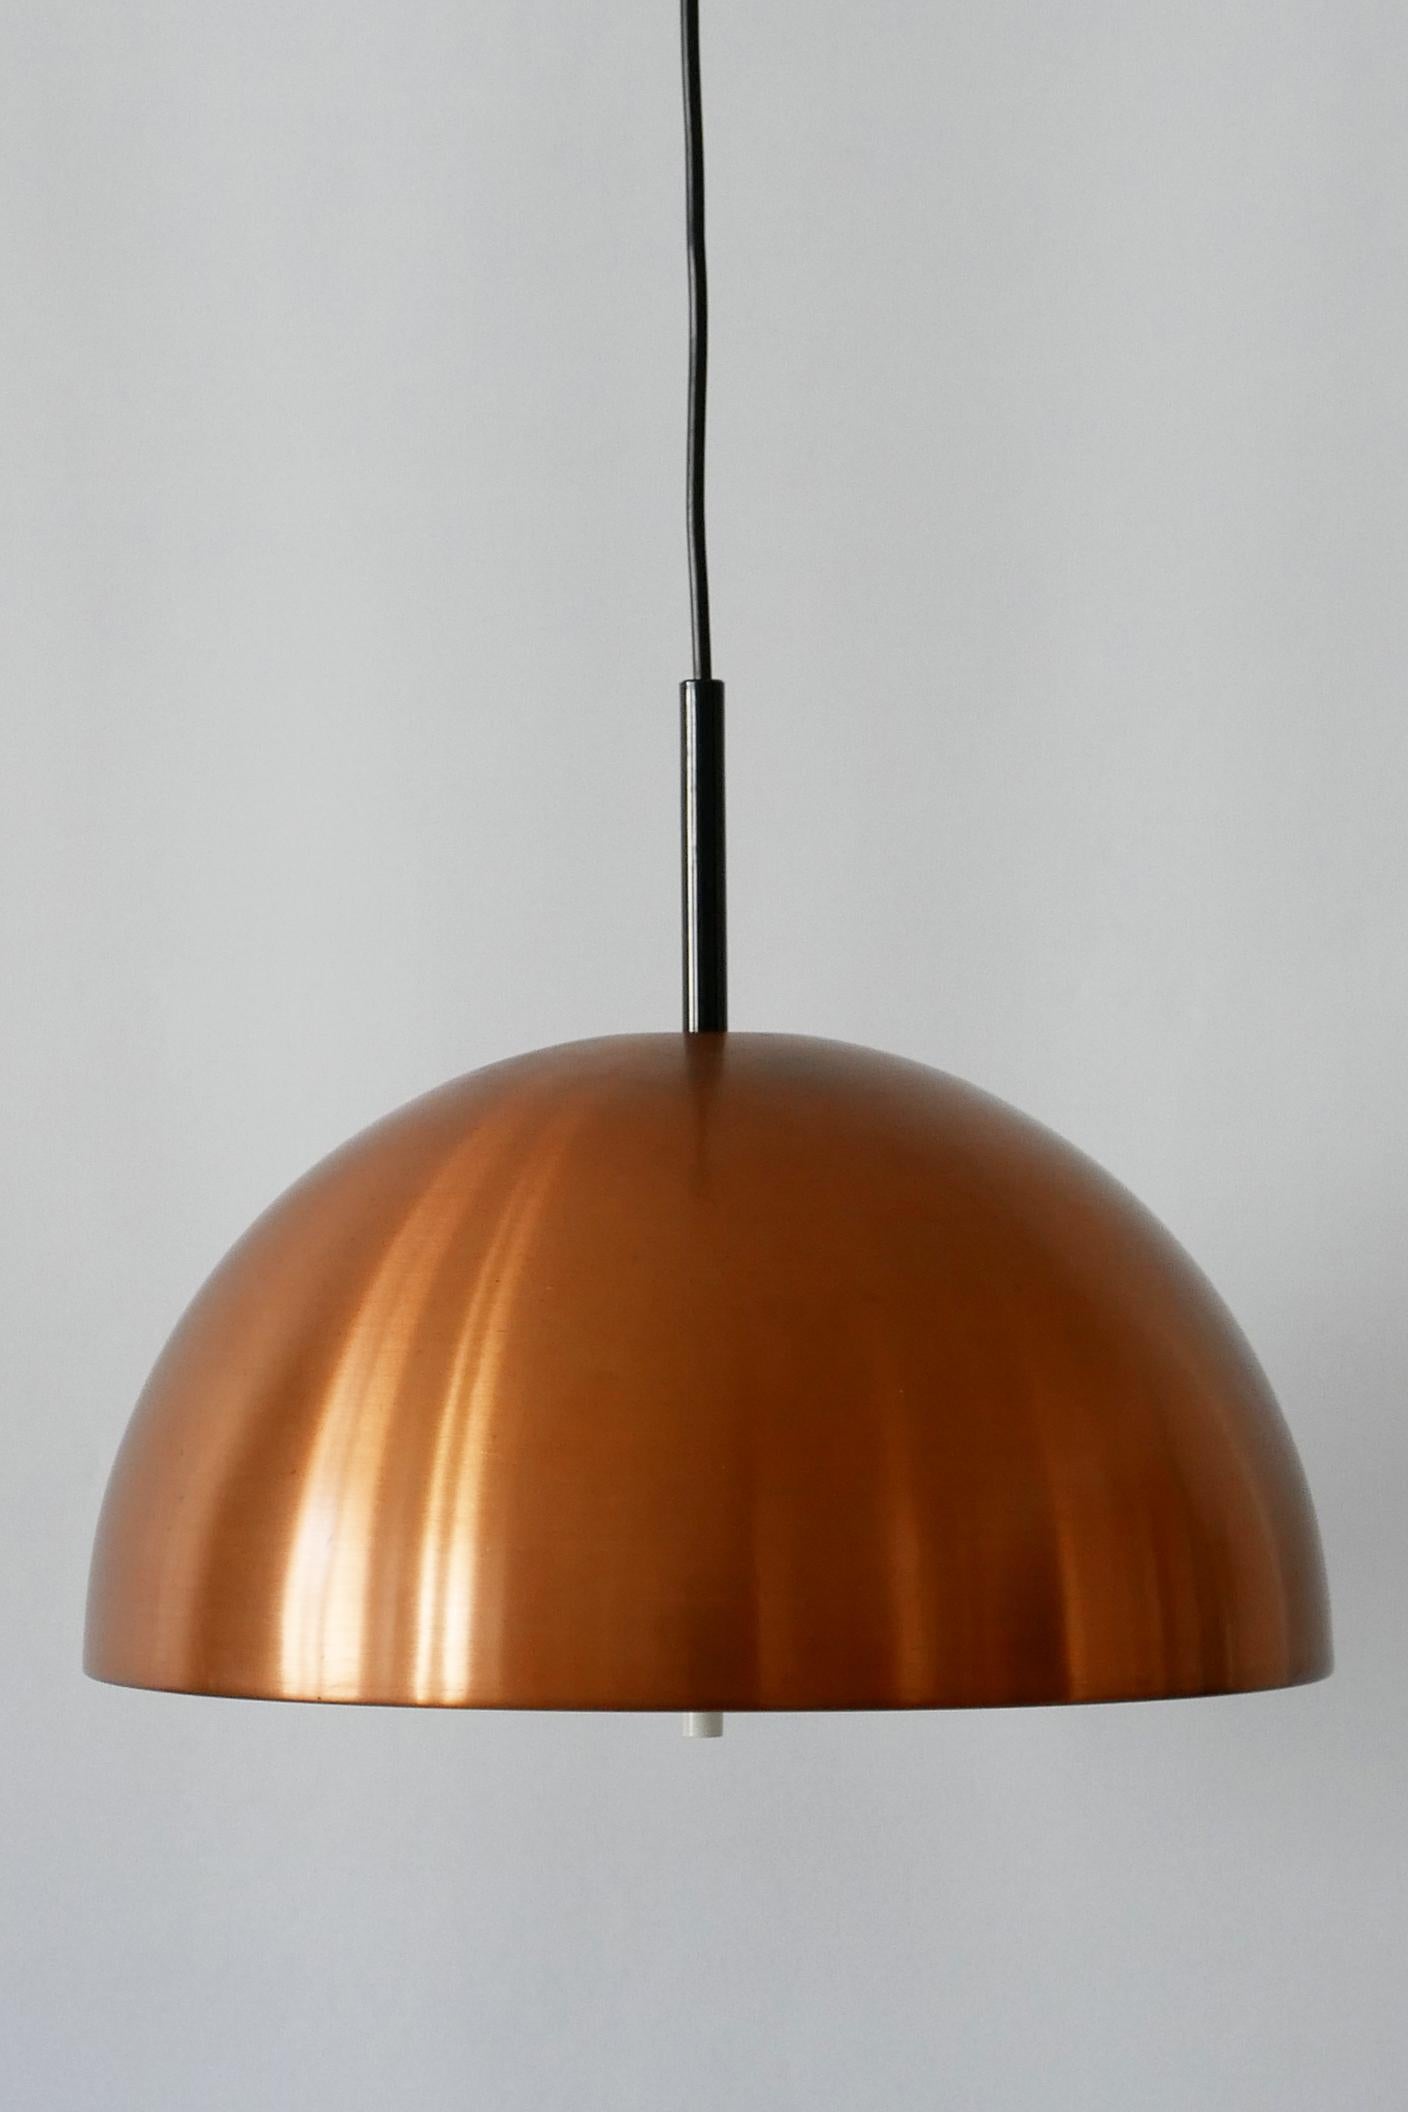 Elegant Mid-Century Modern Copper Pendant Lamp by Staff & Schwarz 1960s, Germany For Sale 4